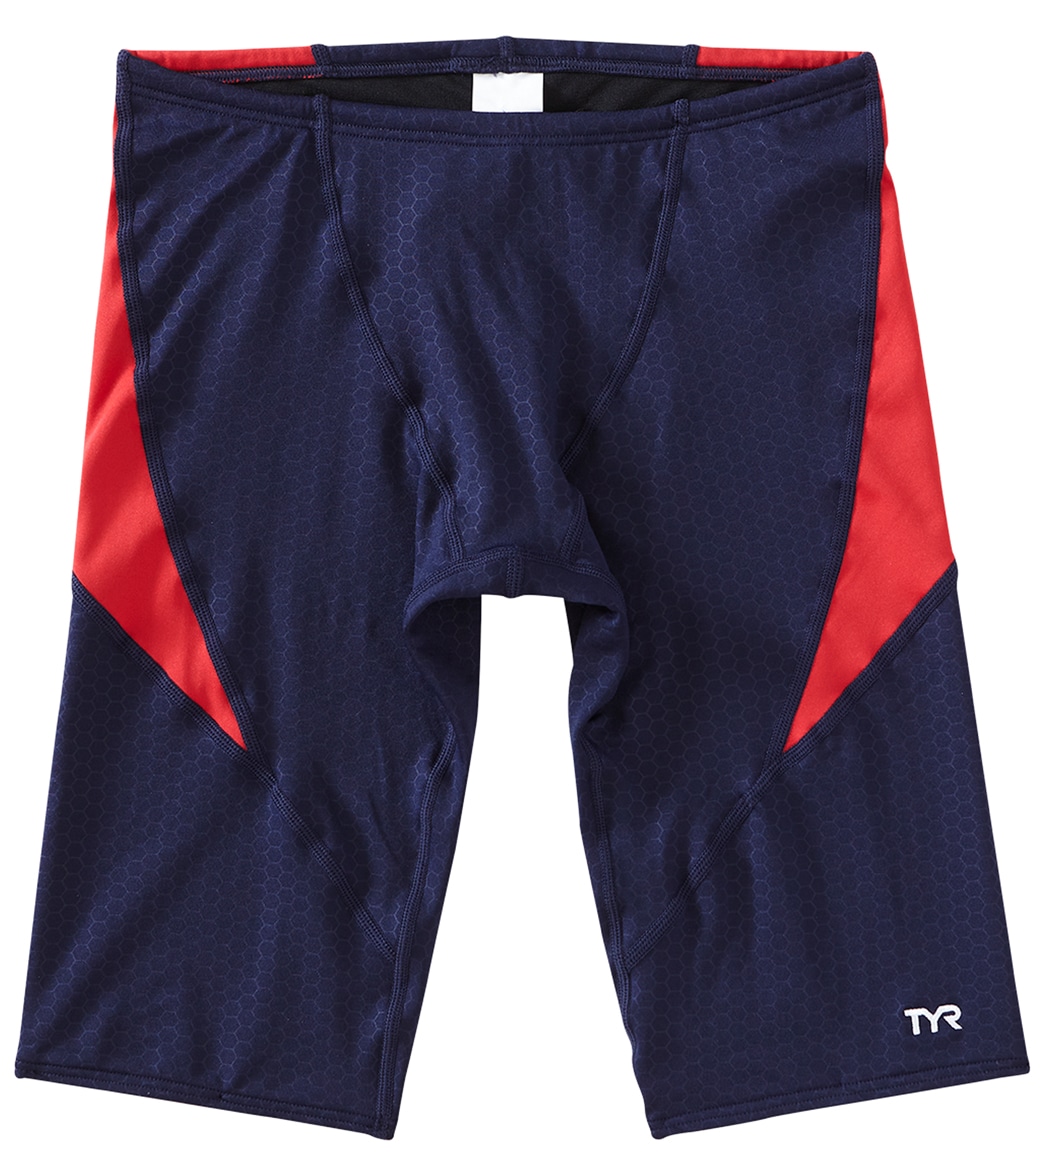 TYR Boys' Hexa Curve Splice Jammer Swimsuit - Navy/Red 22 - Swimoutlet.com